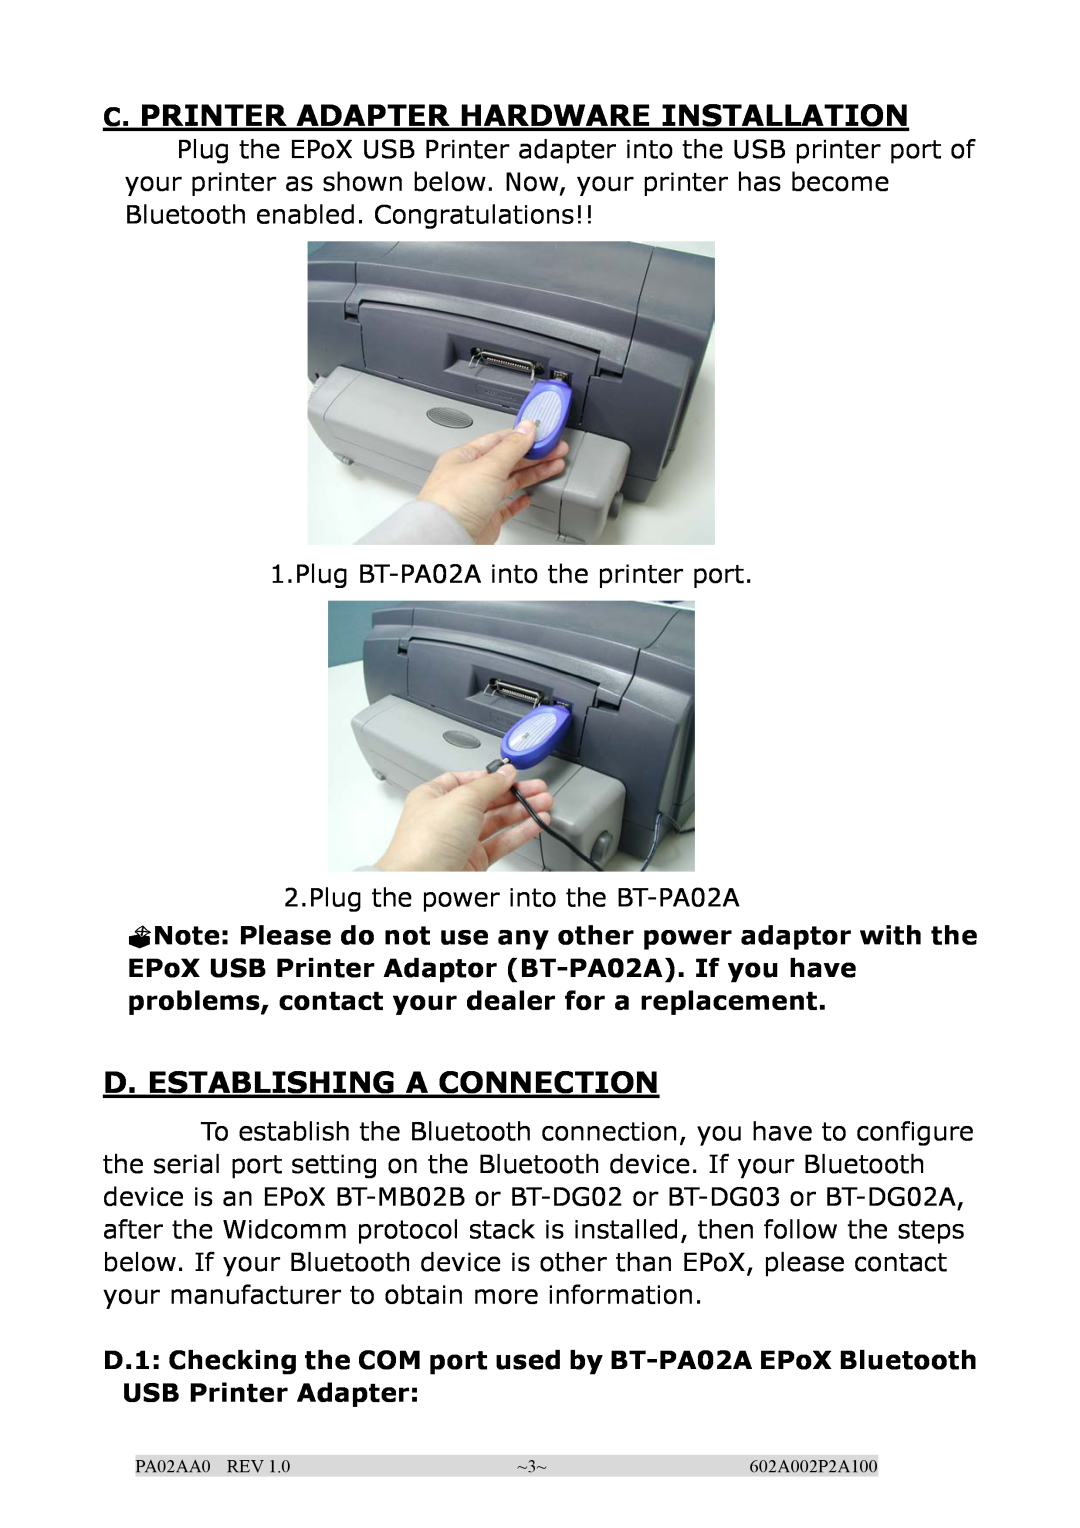 EPoX Computer BT-PA02A manual C. Printer Adapter Hardware Installation, D. Establishing A Connection 